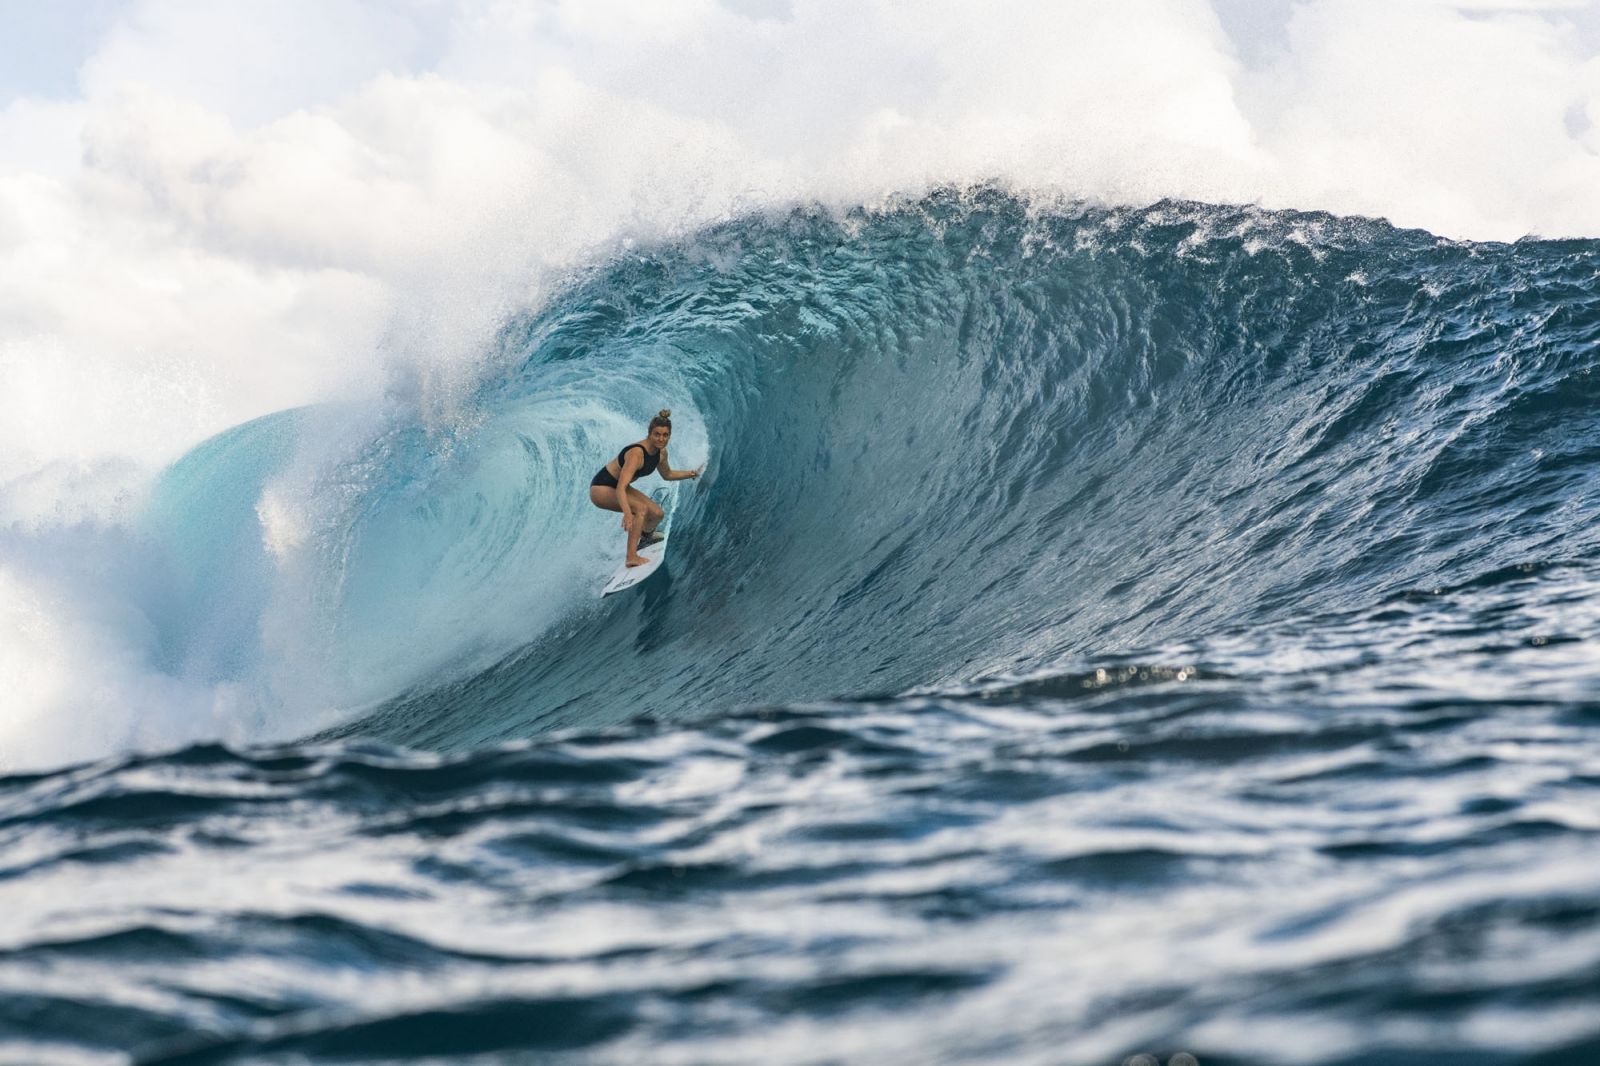 Bronte Macaulay ROXY Pro Surf